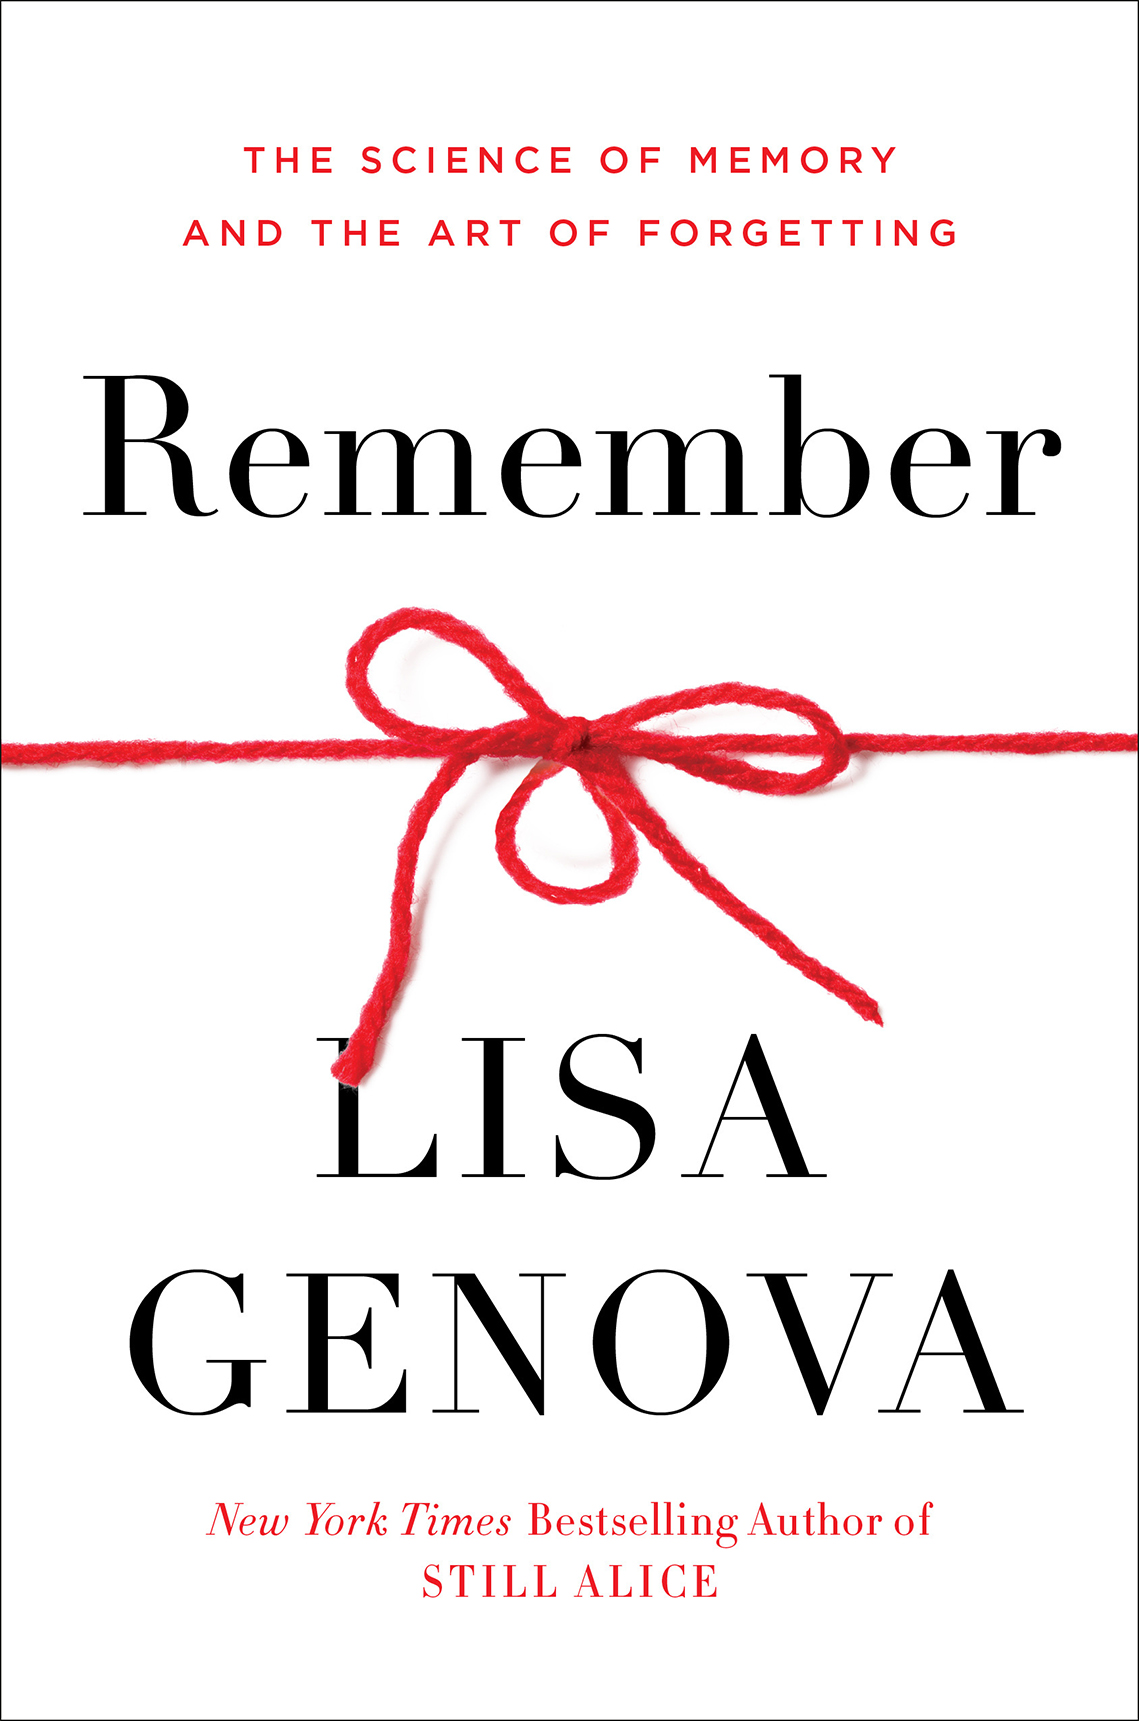 Portada del libro "Remember" por Lisa Genova.  